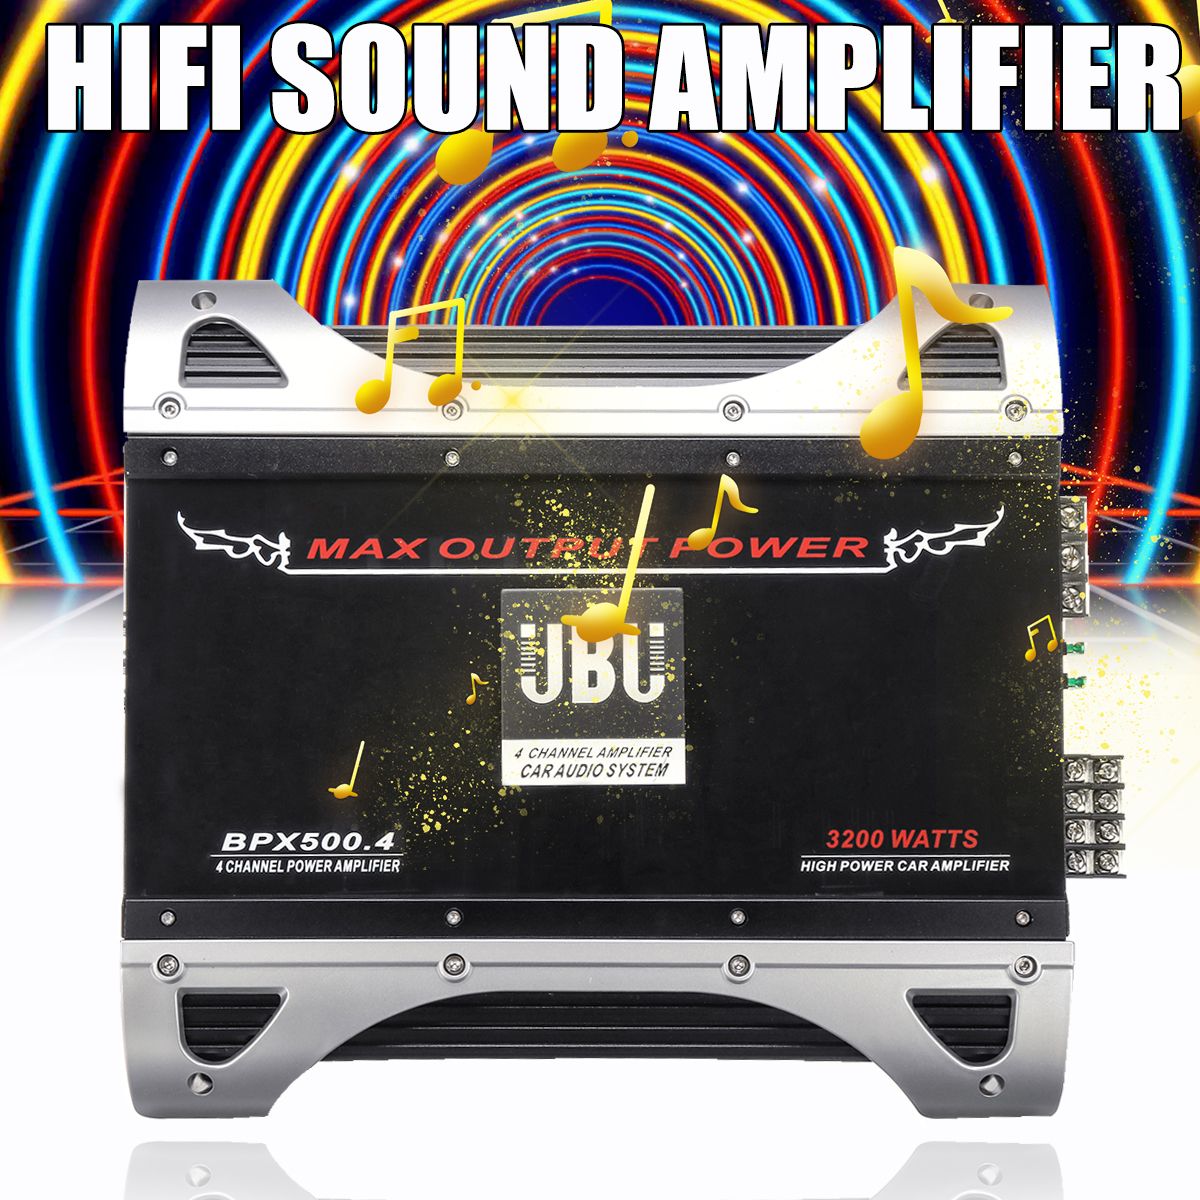 Crunch-4-Channel3200-Watt-Amp-Car-Stereo-HIFI-Sound-Amplifier-Home-Music-AMP-FM-Panel-1524384